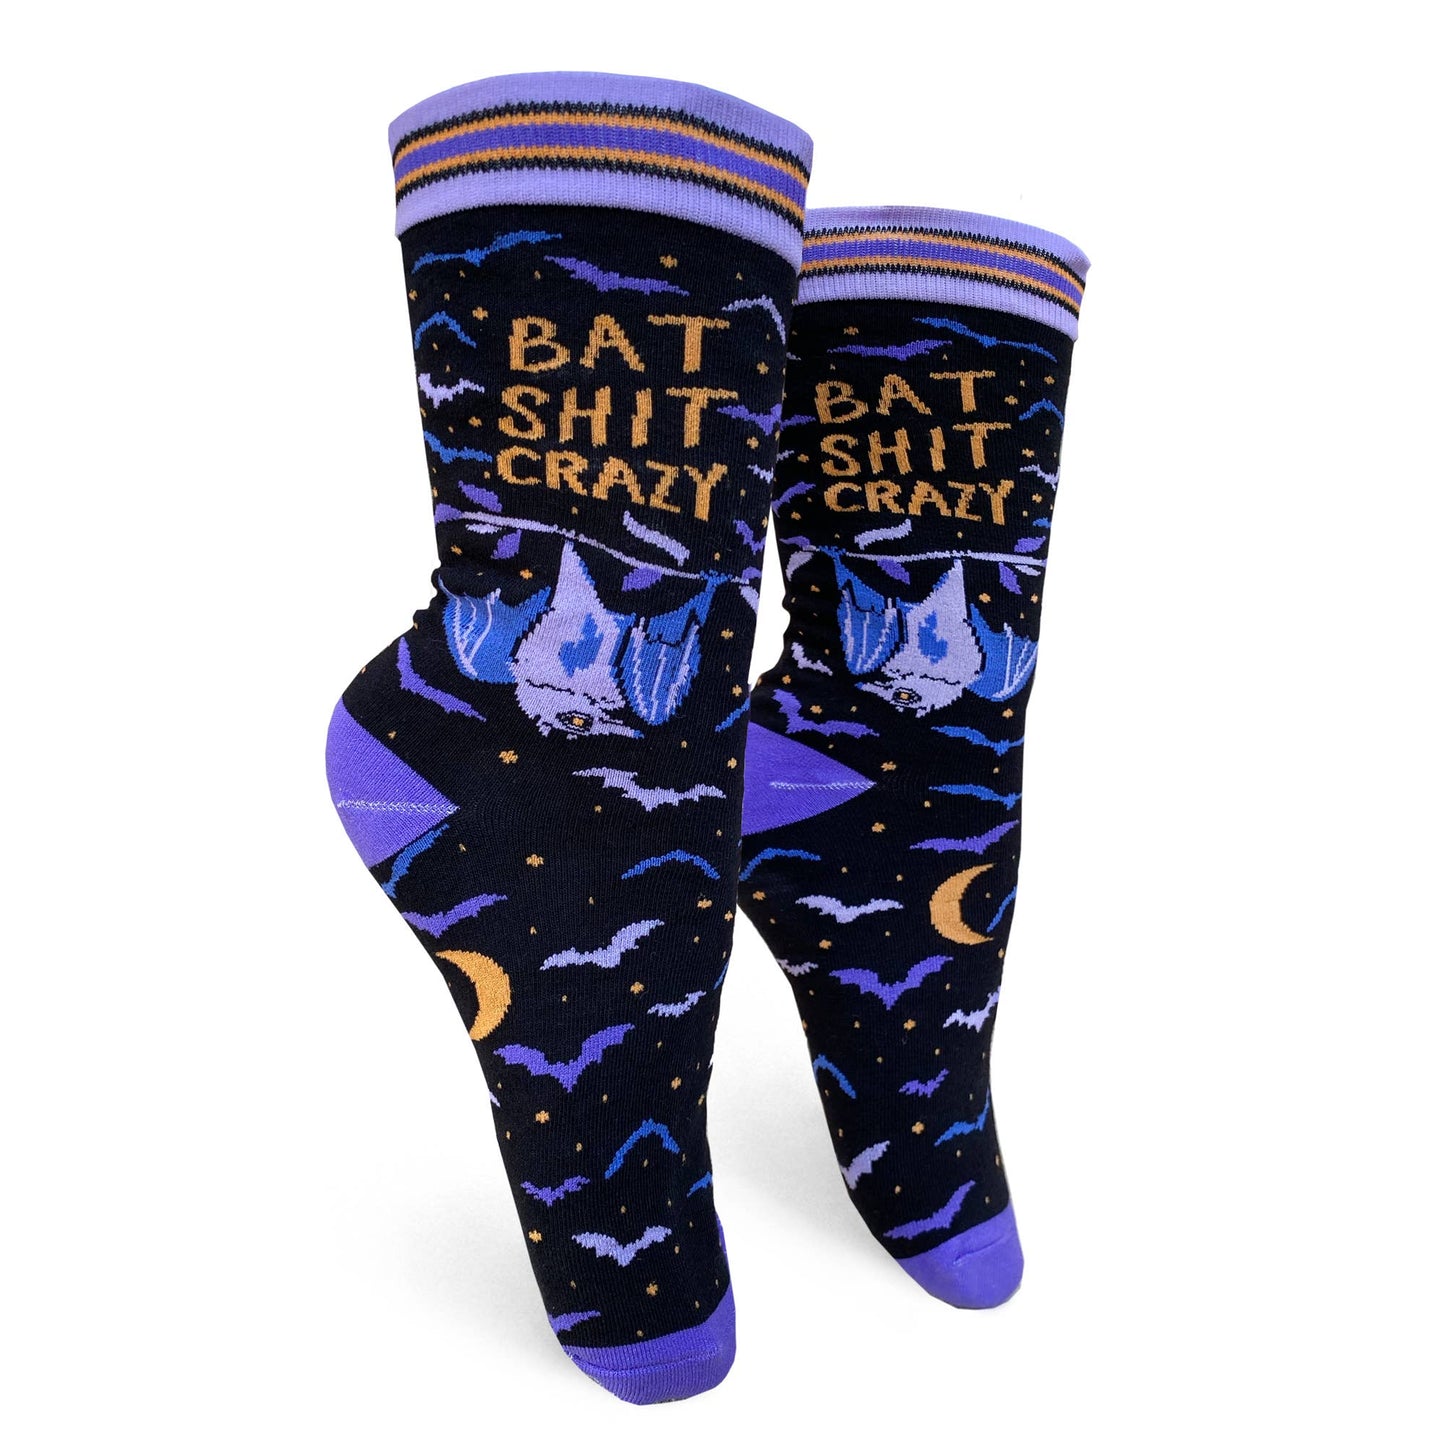 Bat Shit Crazy Women's Crew Socks